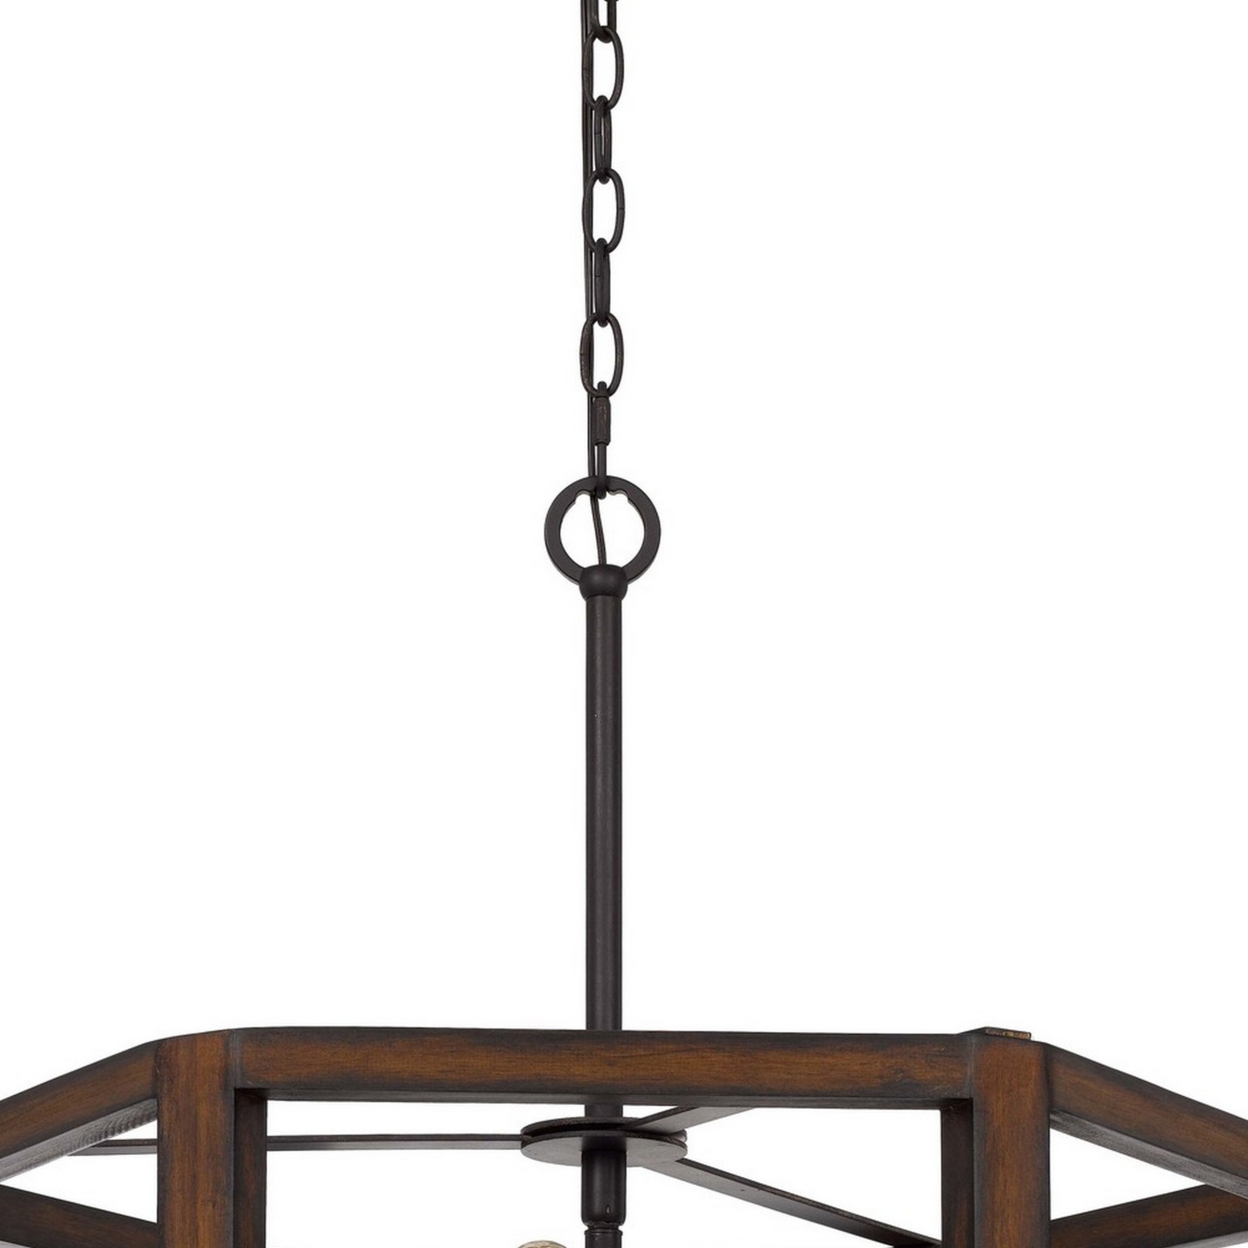 Chandelier With Hexagonal Open Wooden Frame And Hanging Chain, Brown- Saltoro Sherpi